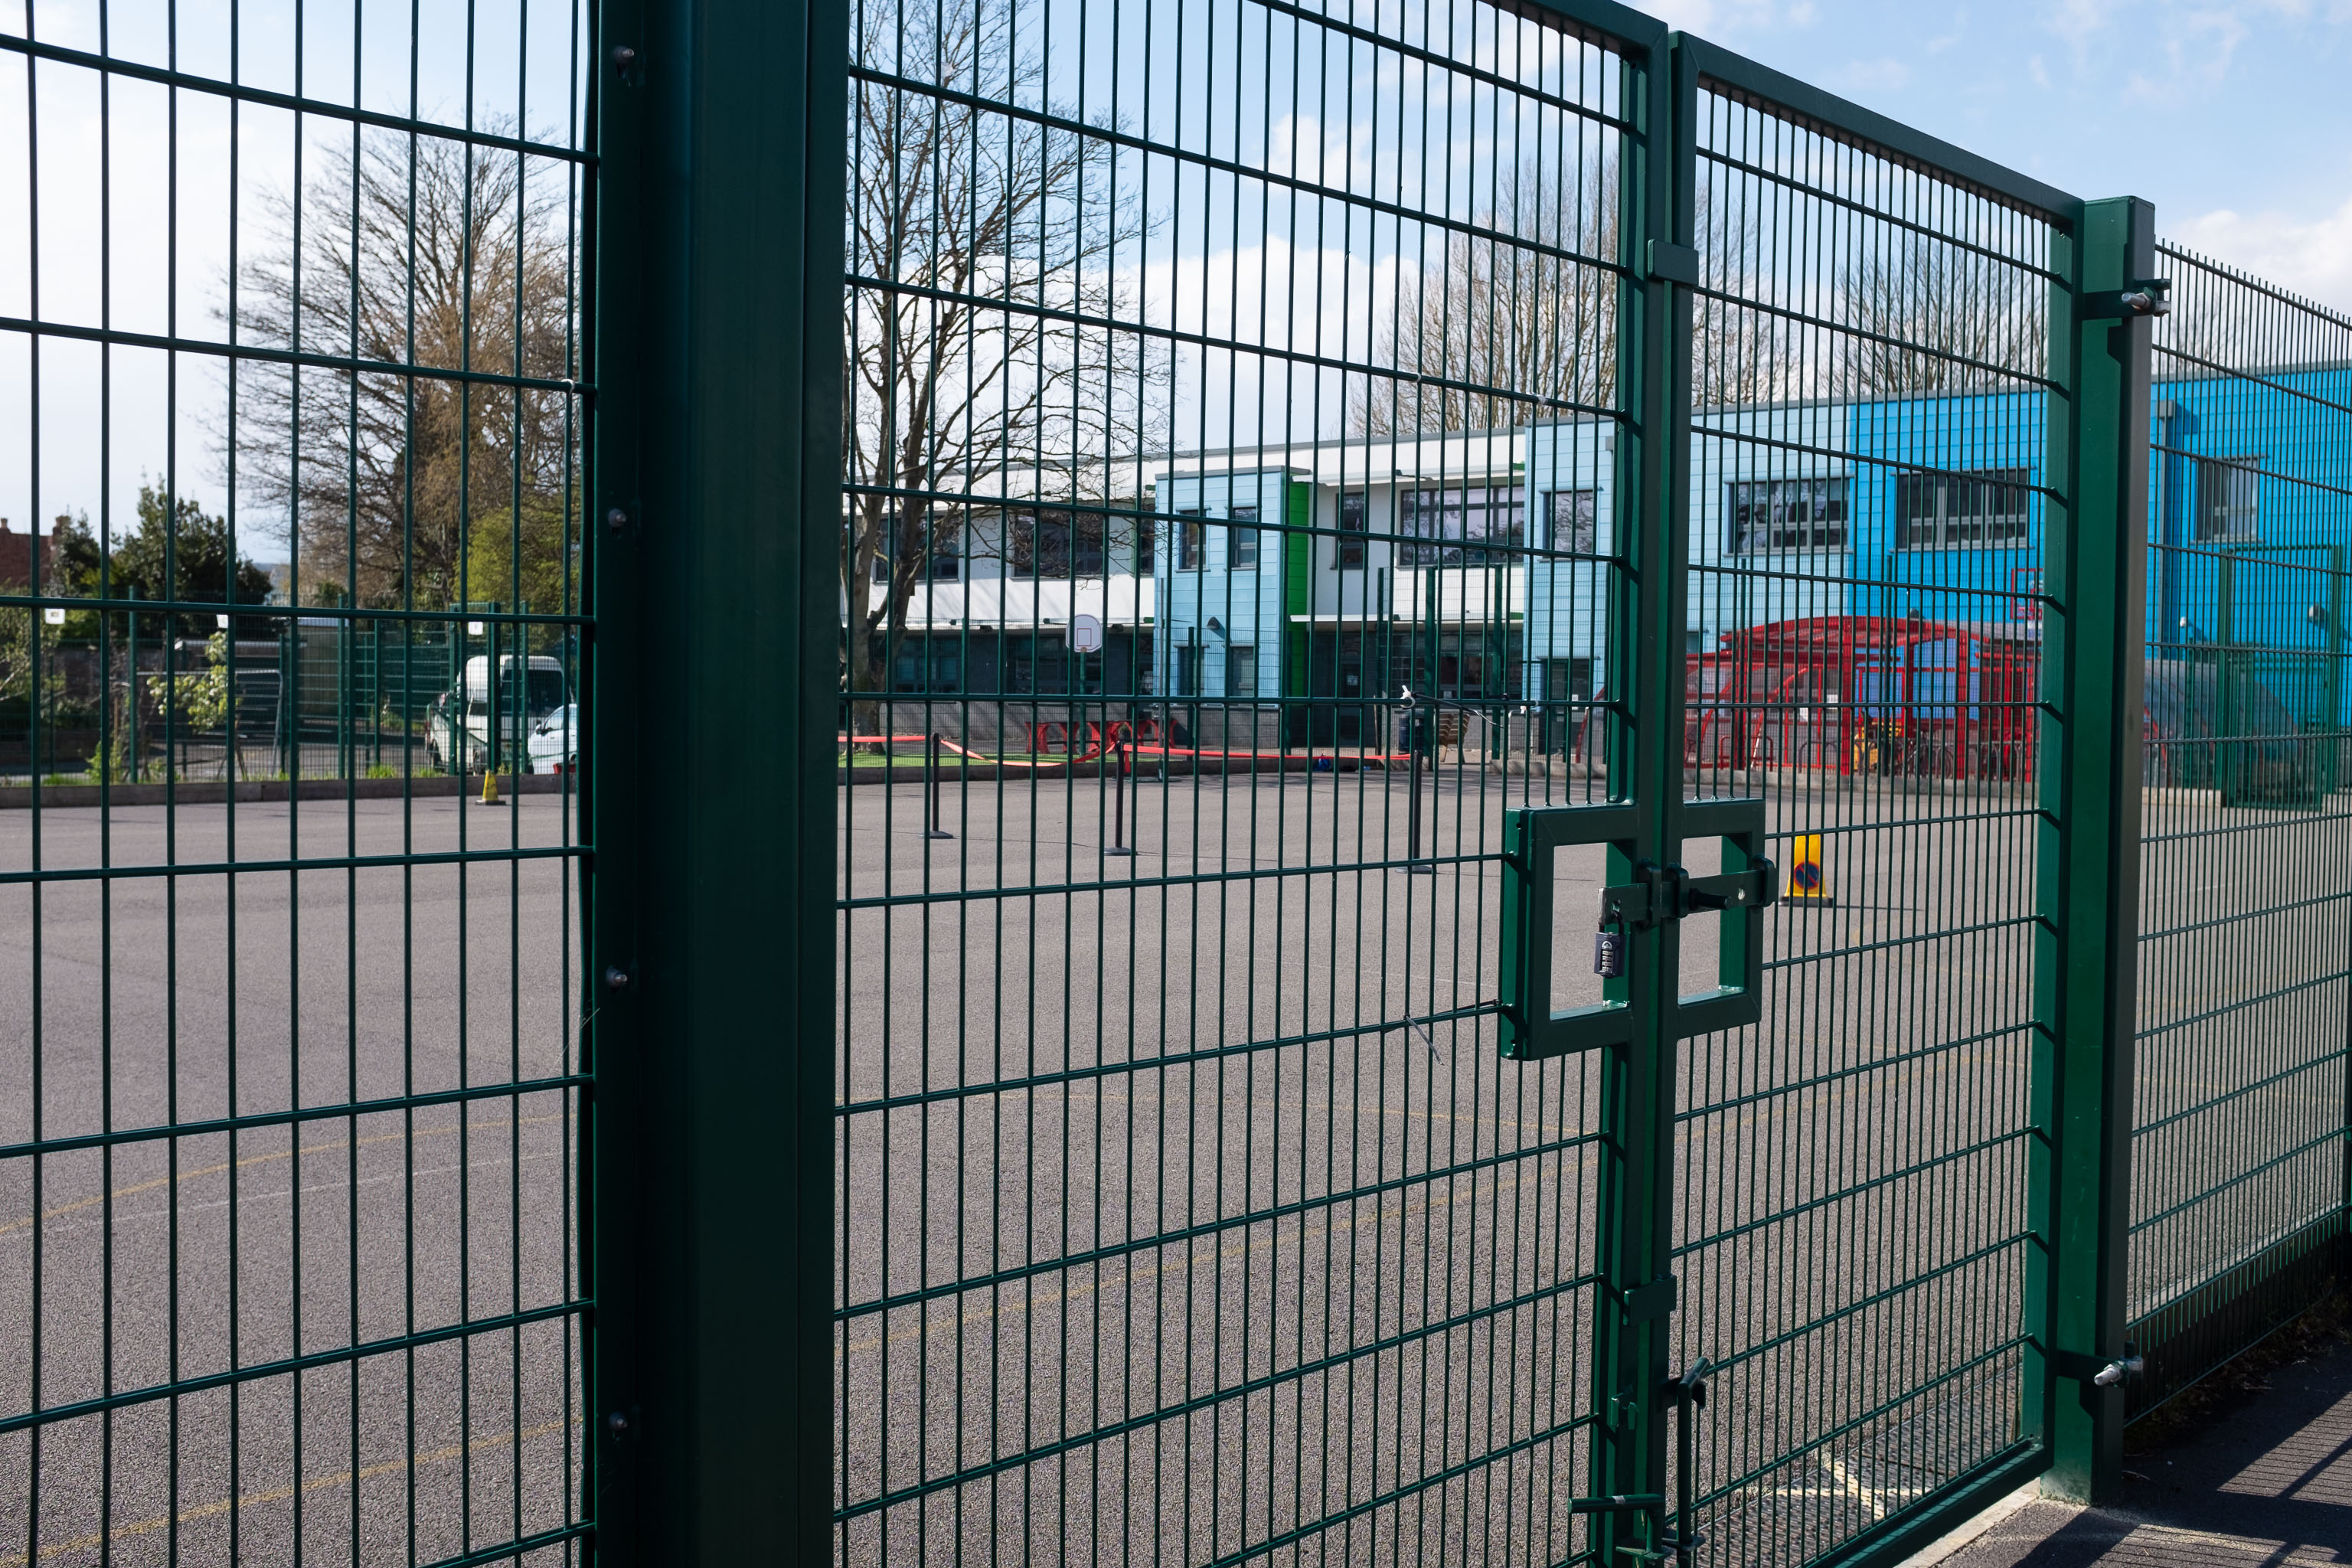 Gated
Presumably belongs to the school.
